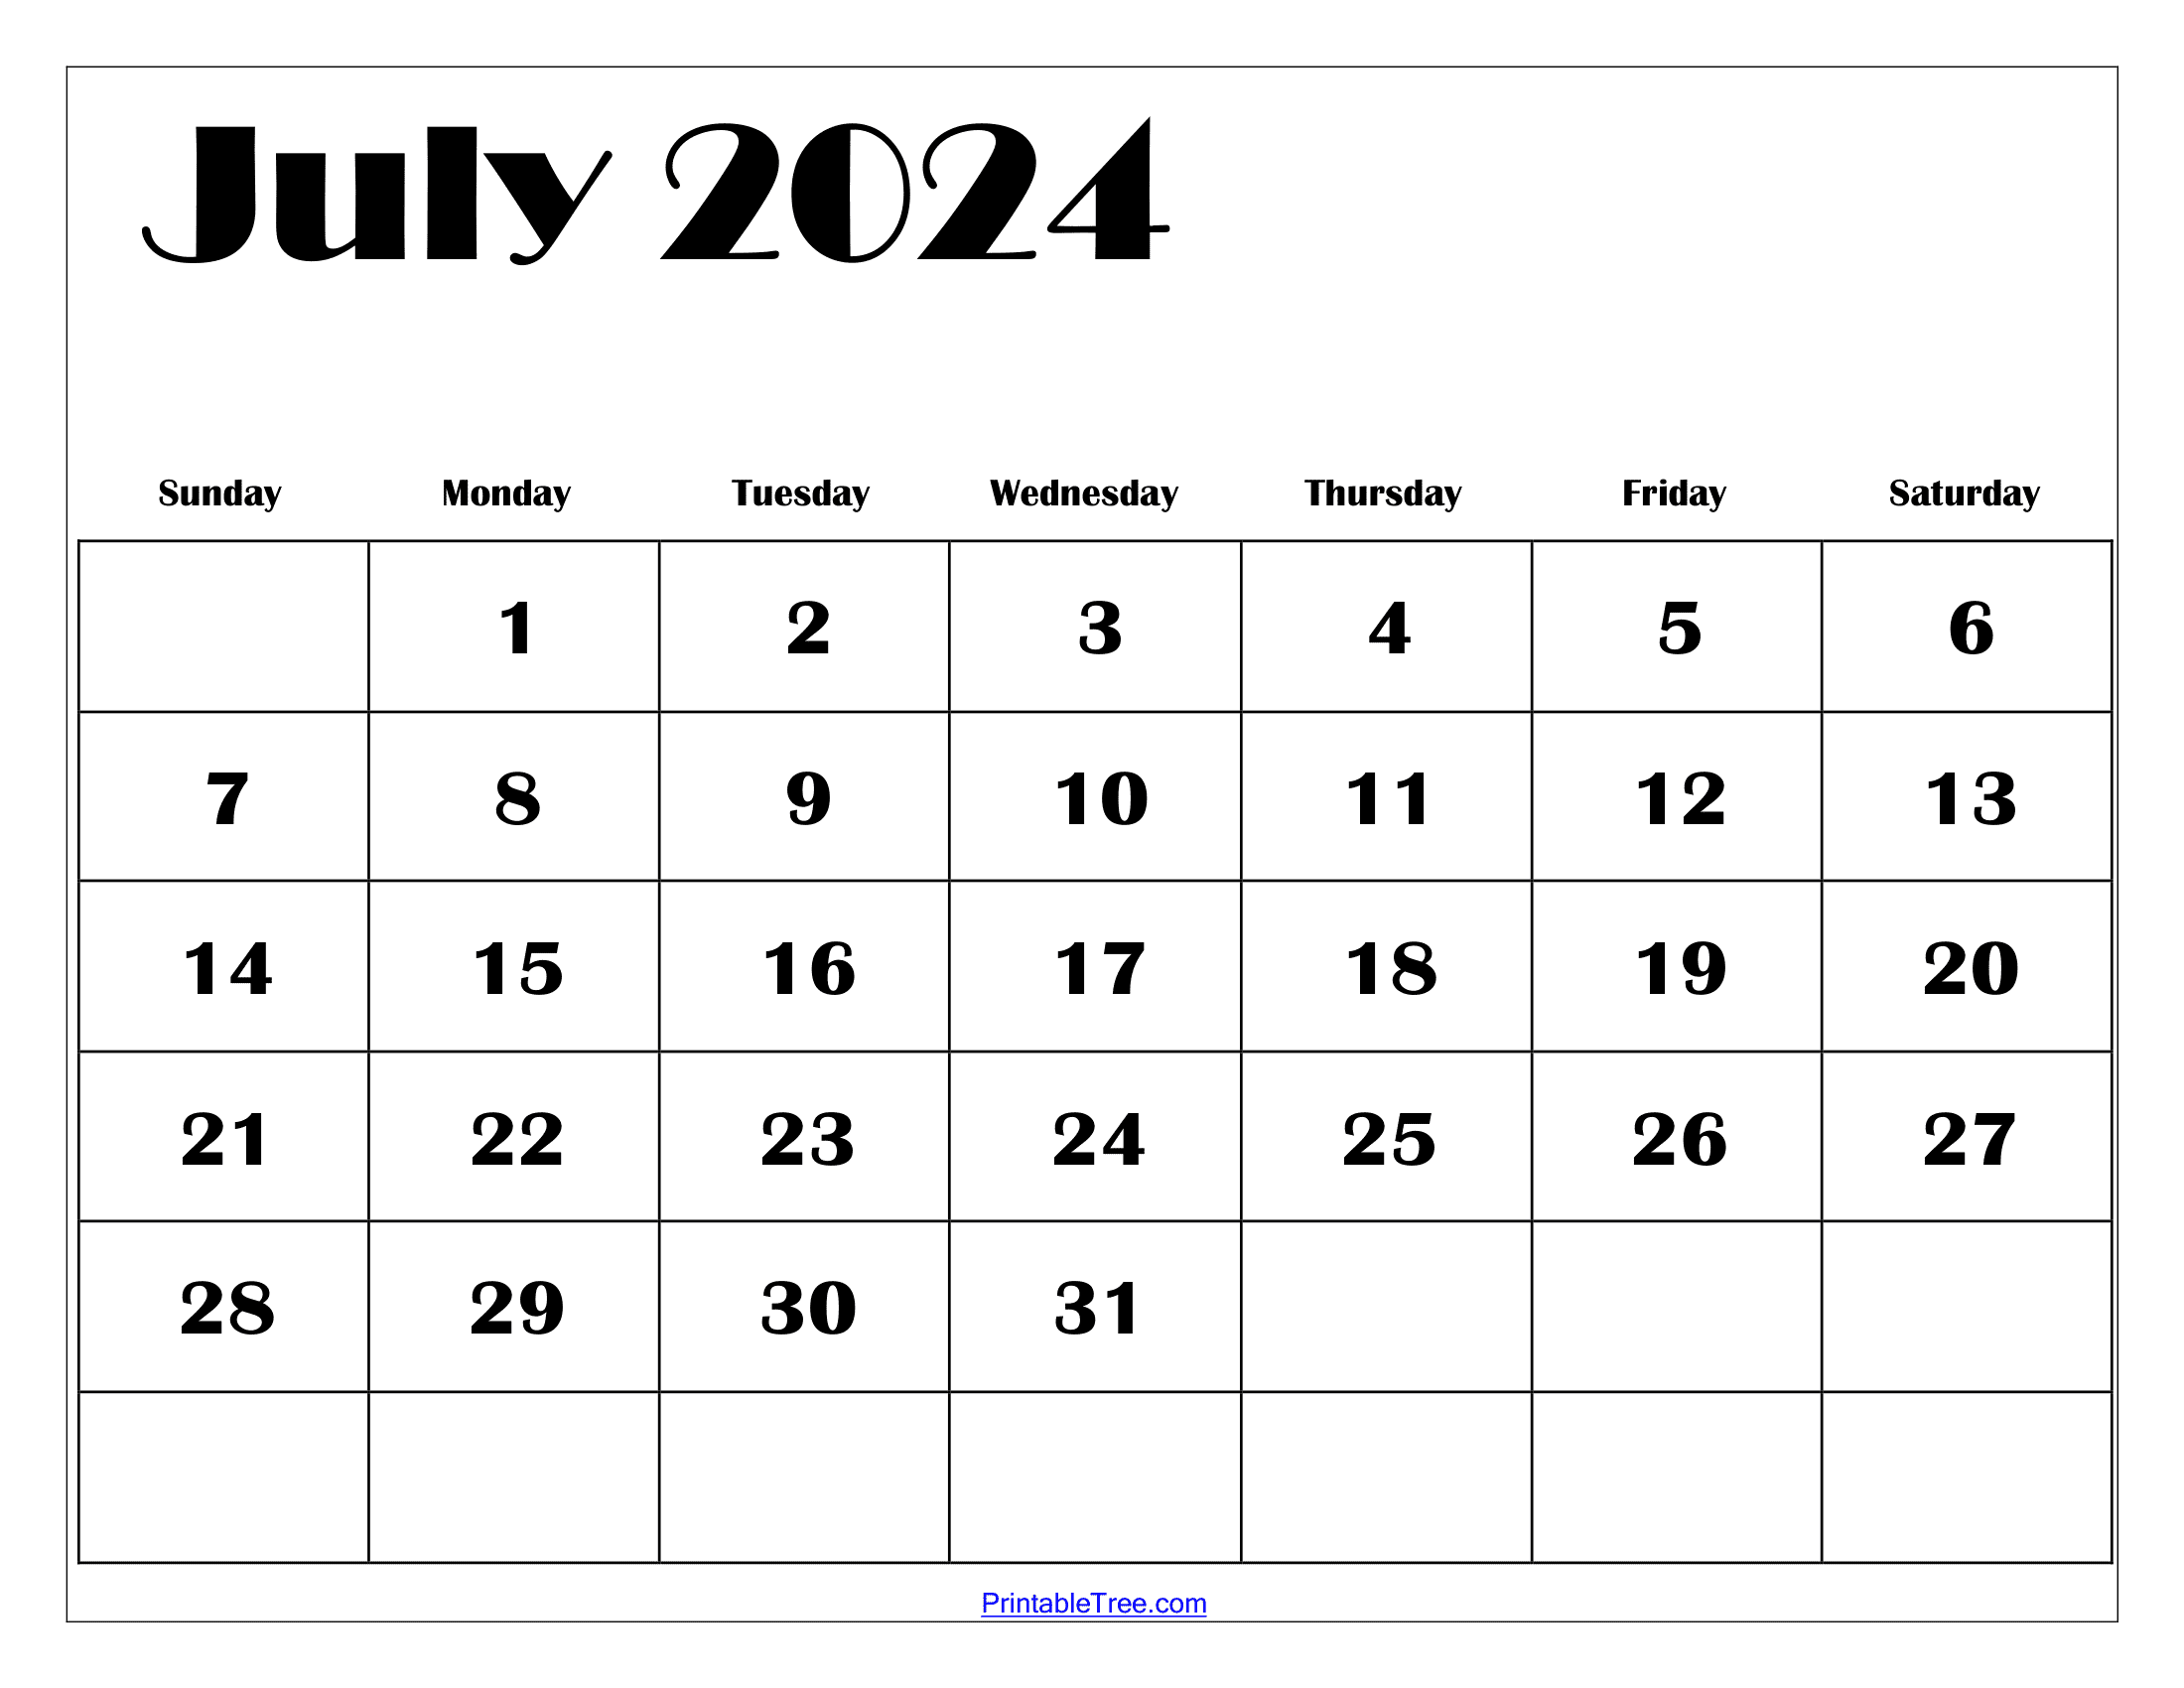 July 2024 Calendar Printable Pdf With Holidays Free Template for Blank Calendar Template July 2024 Printable